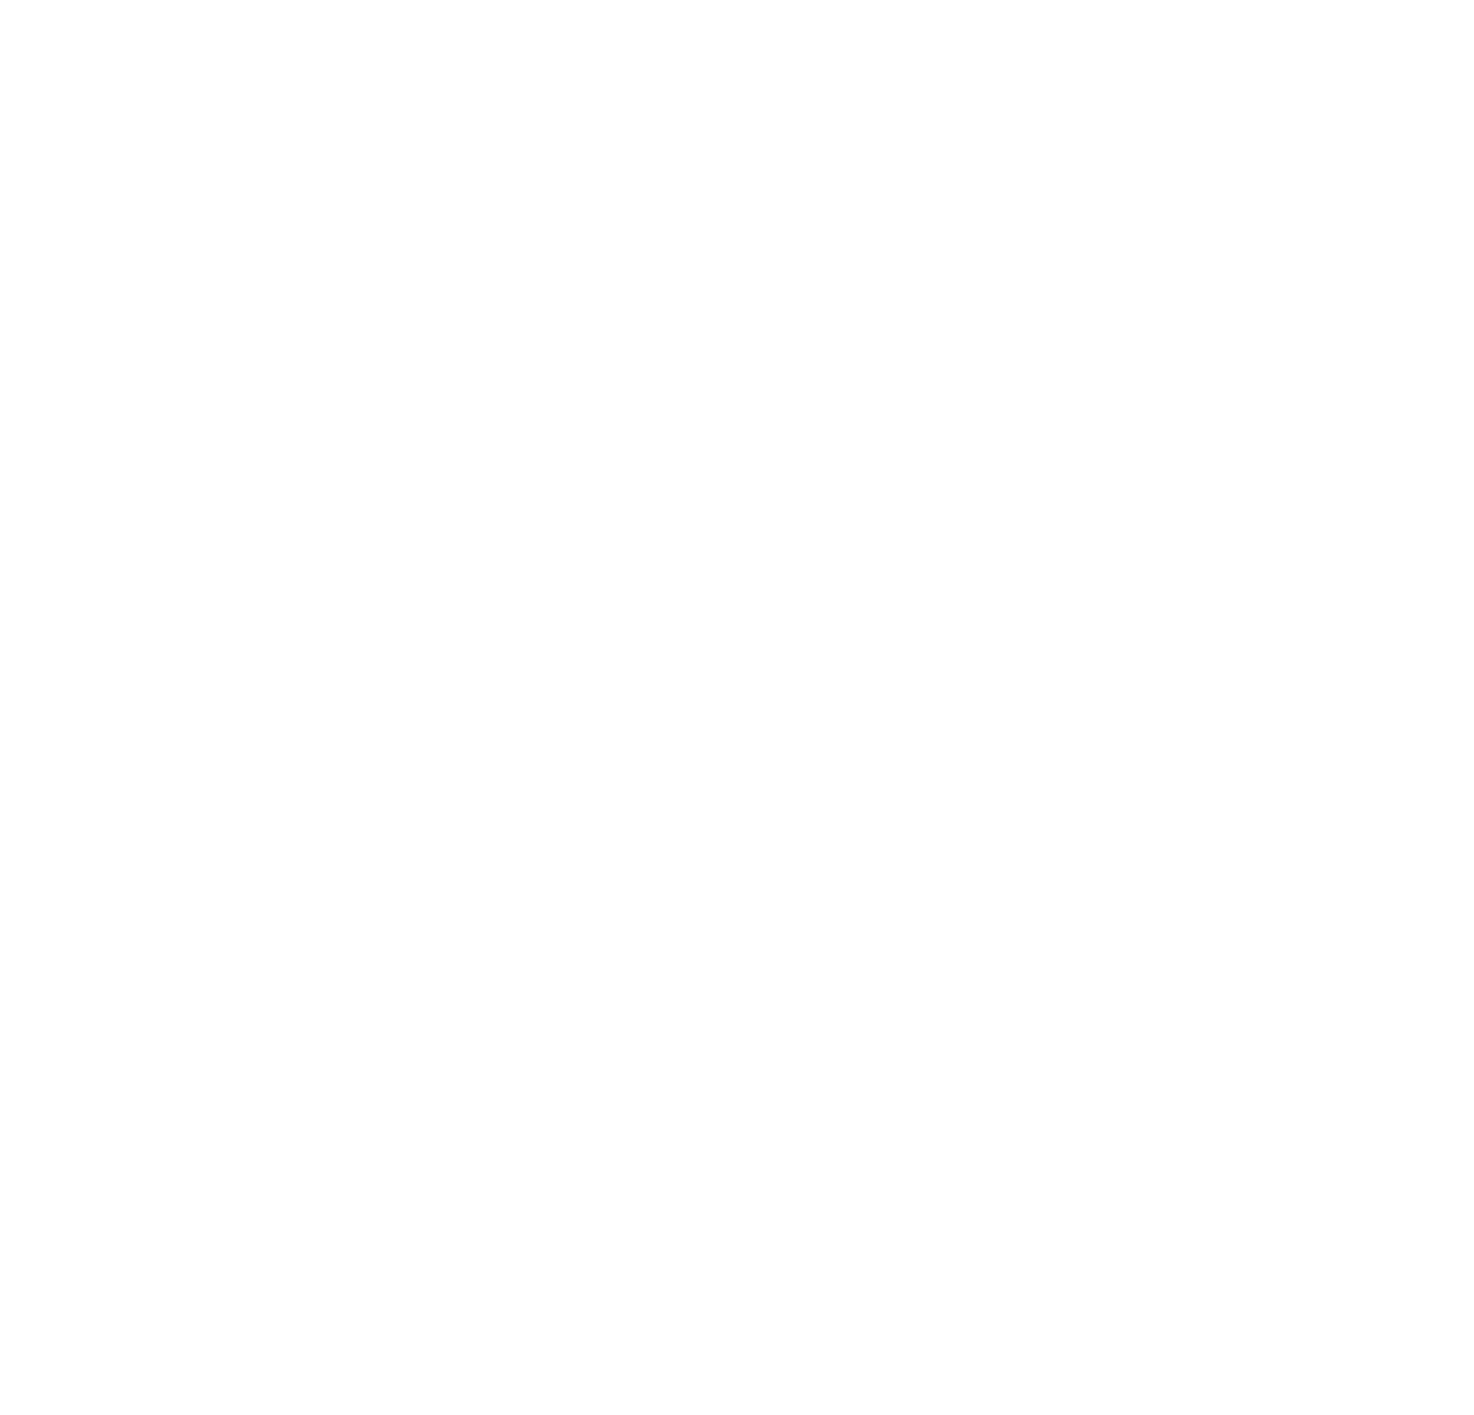 Bisbee-Brownstone-Logo